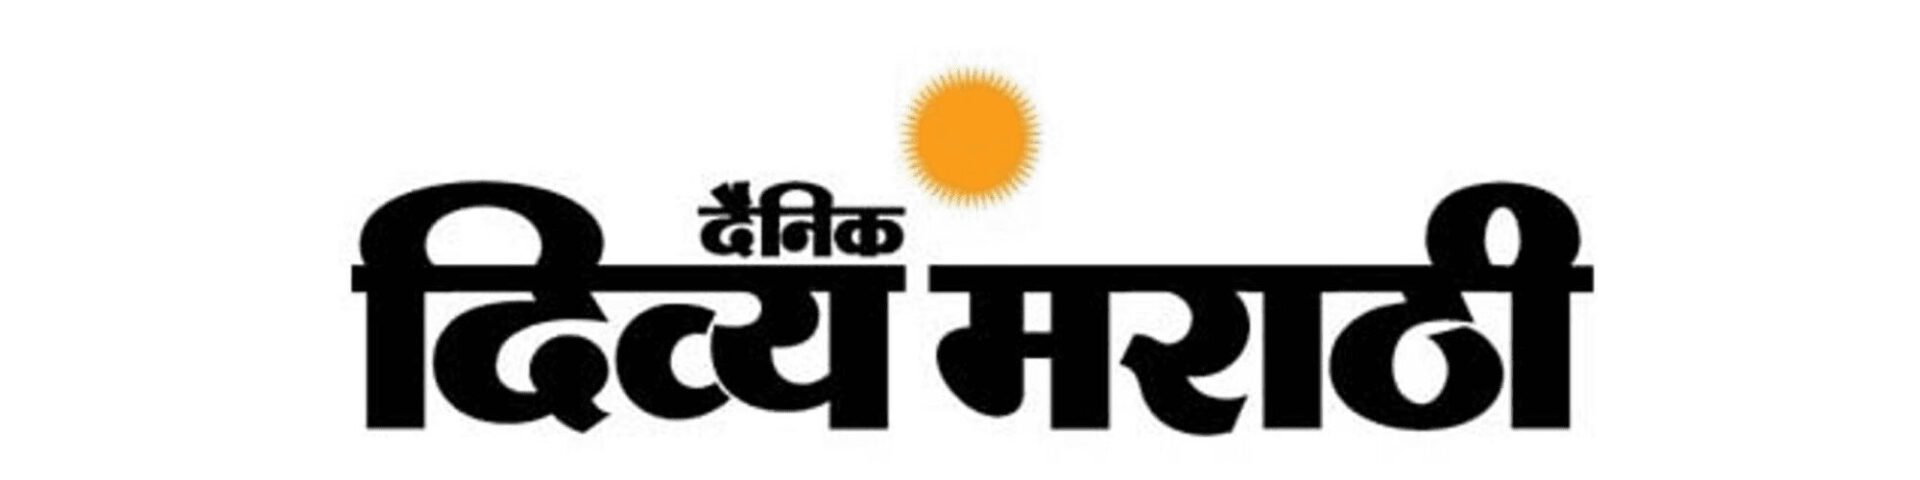 Divya Marathi logo